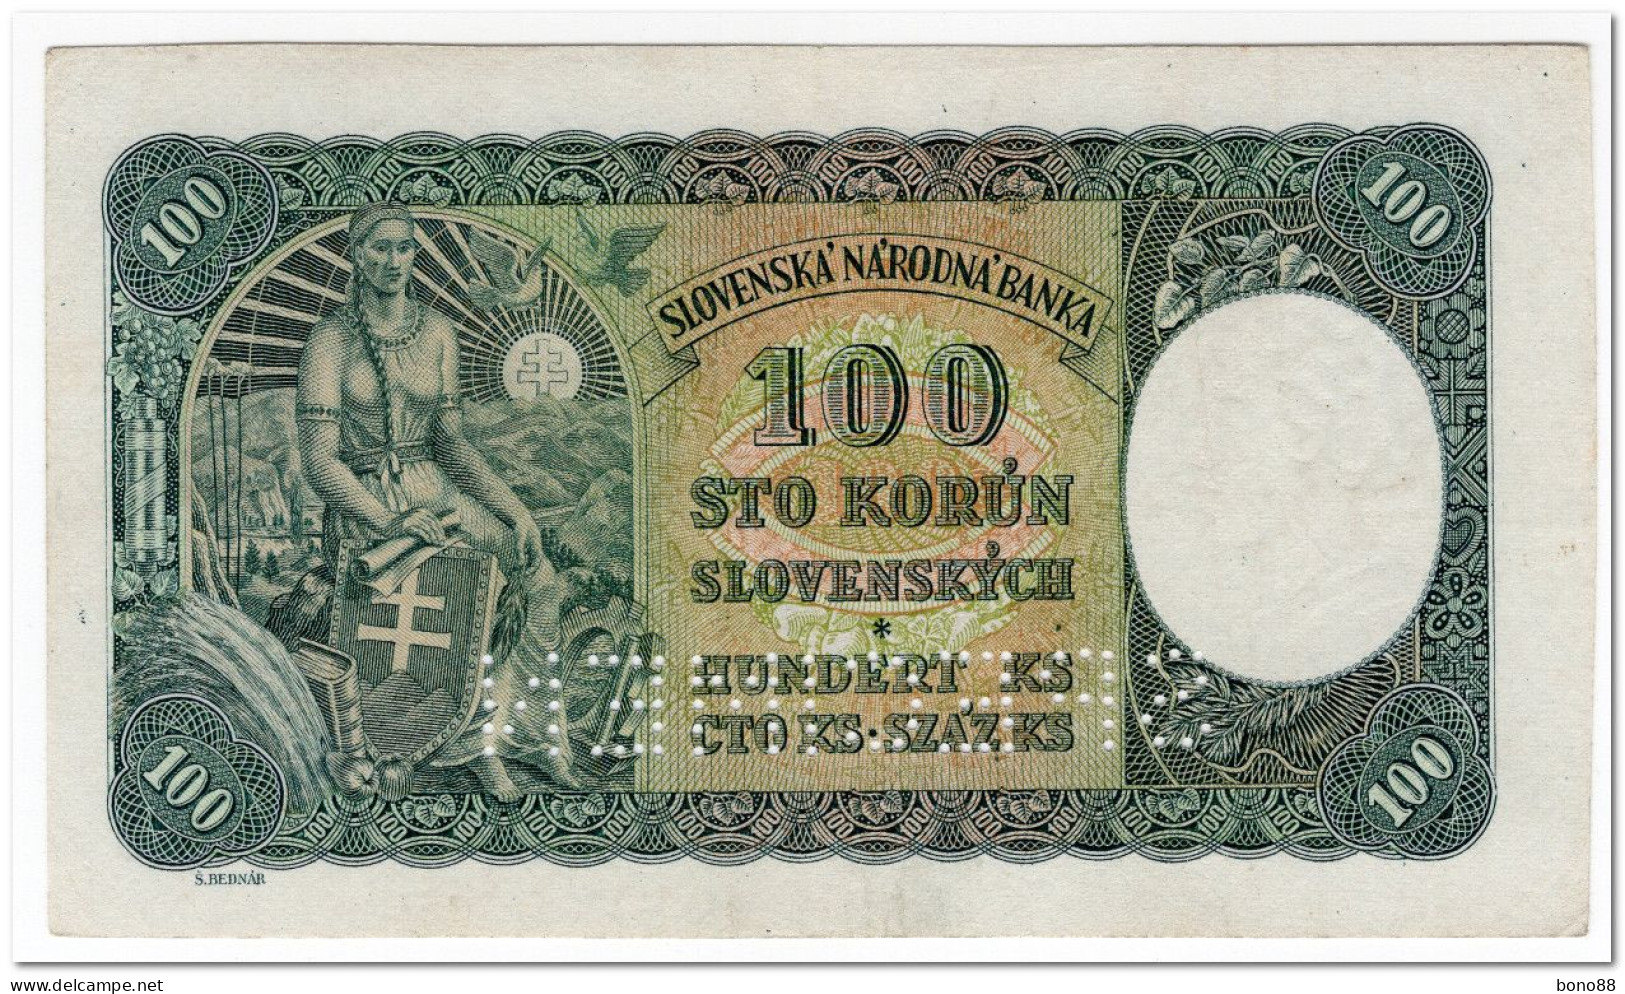 SLOVAKIA,100 KORUN,1940,P.10,AU,SPECIMEN,PERFORATED - Slovacchia